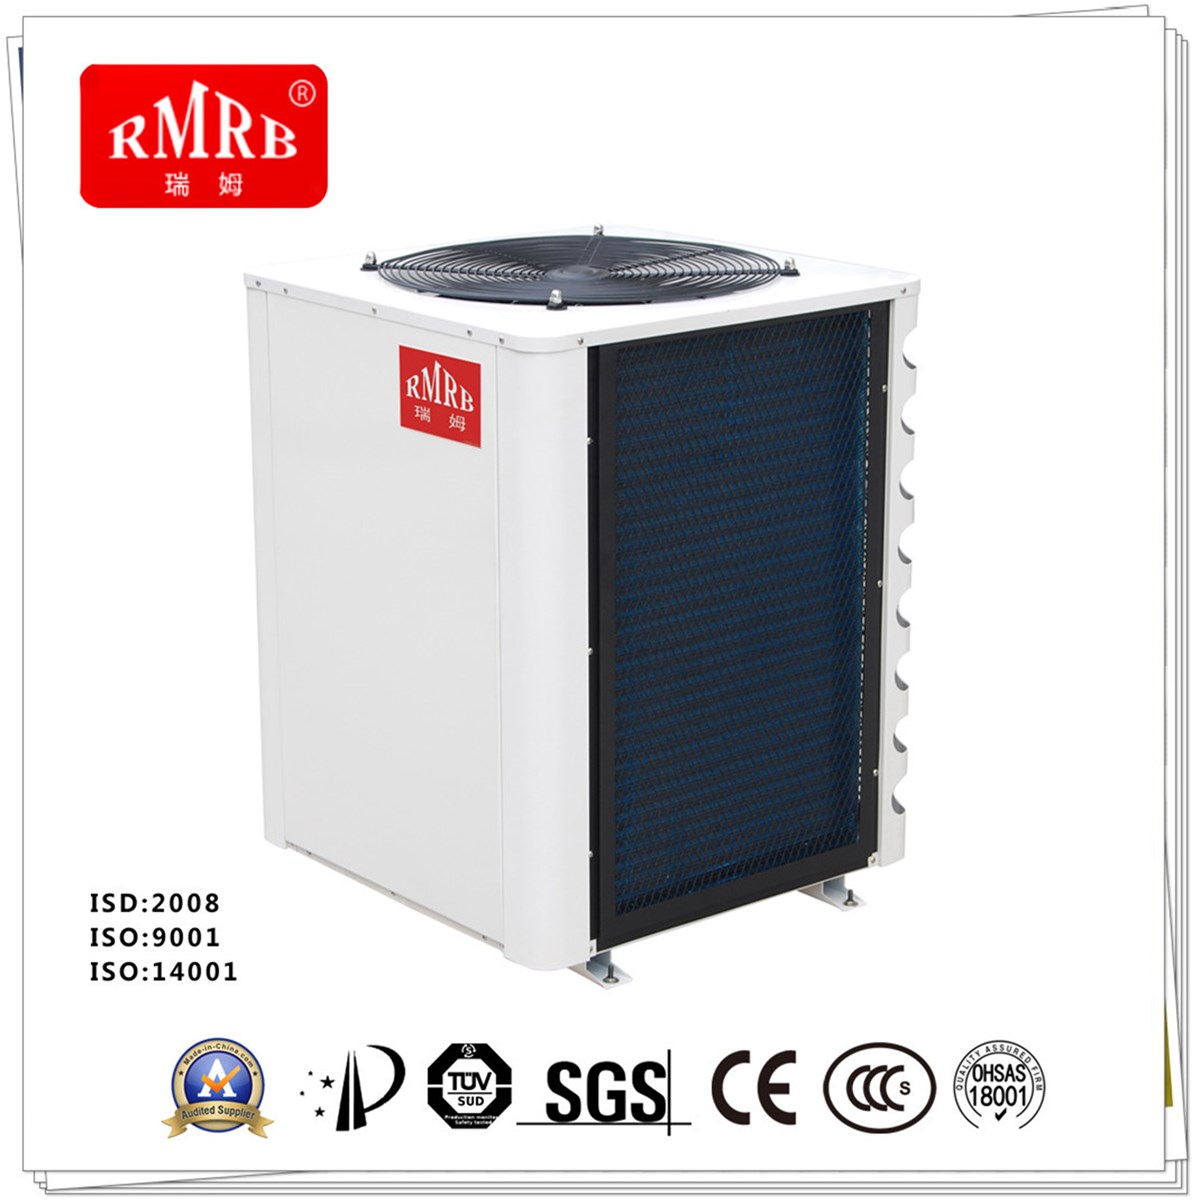 Manufacturer EnergySaving 80 Power Heat Pump Unit with 8kw